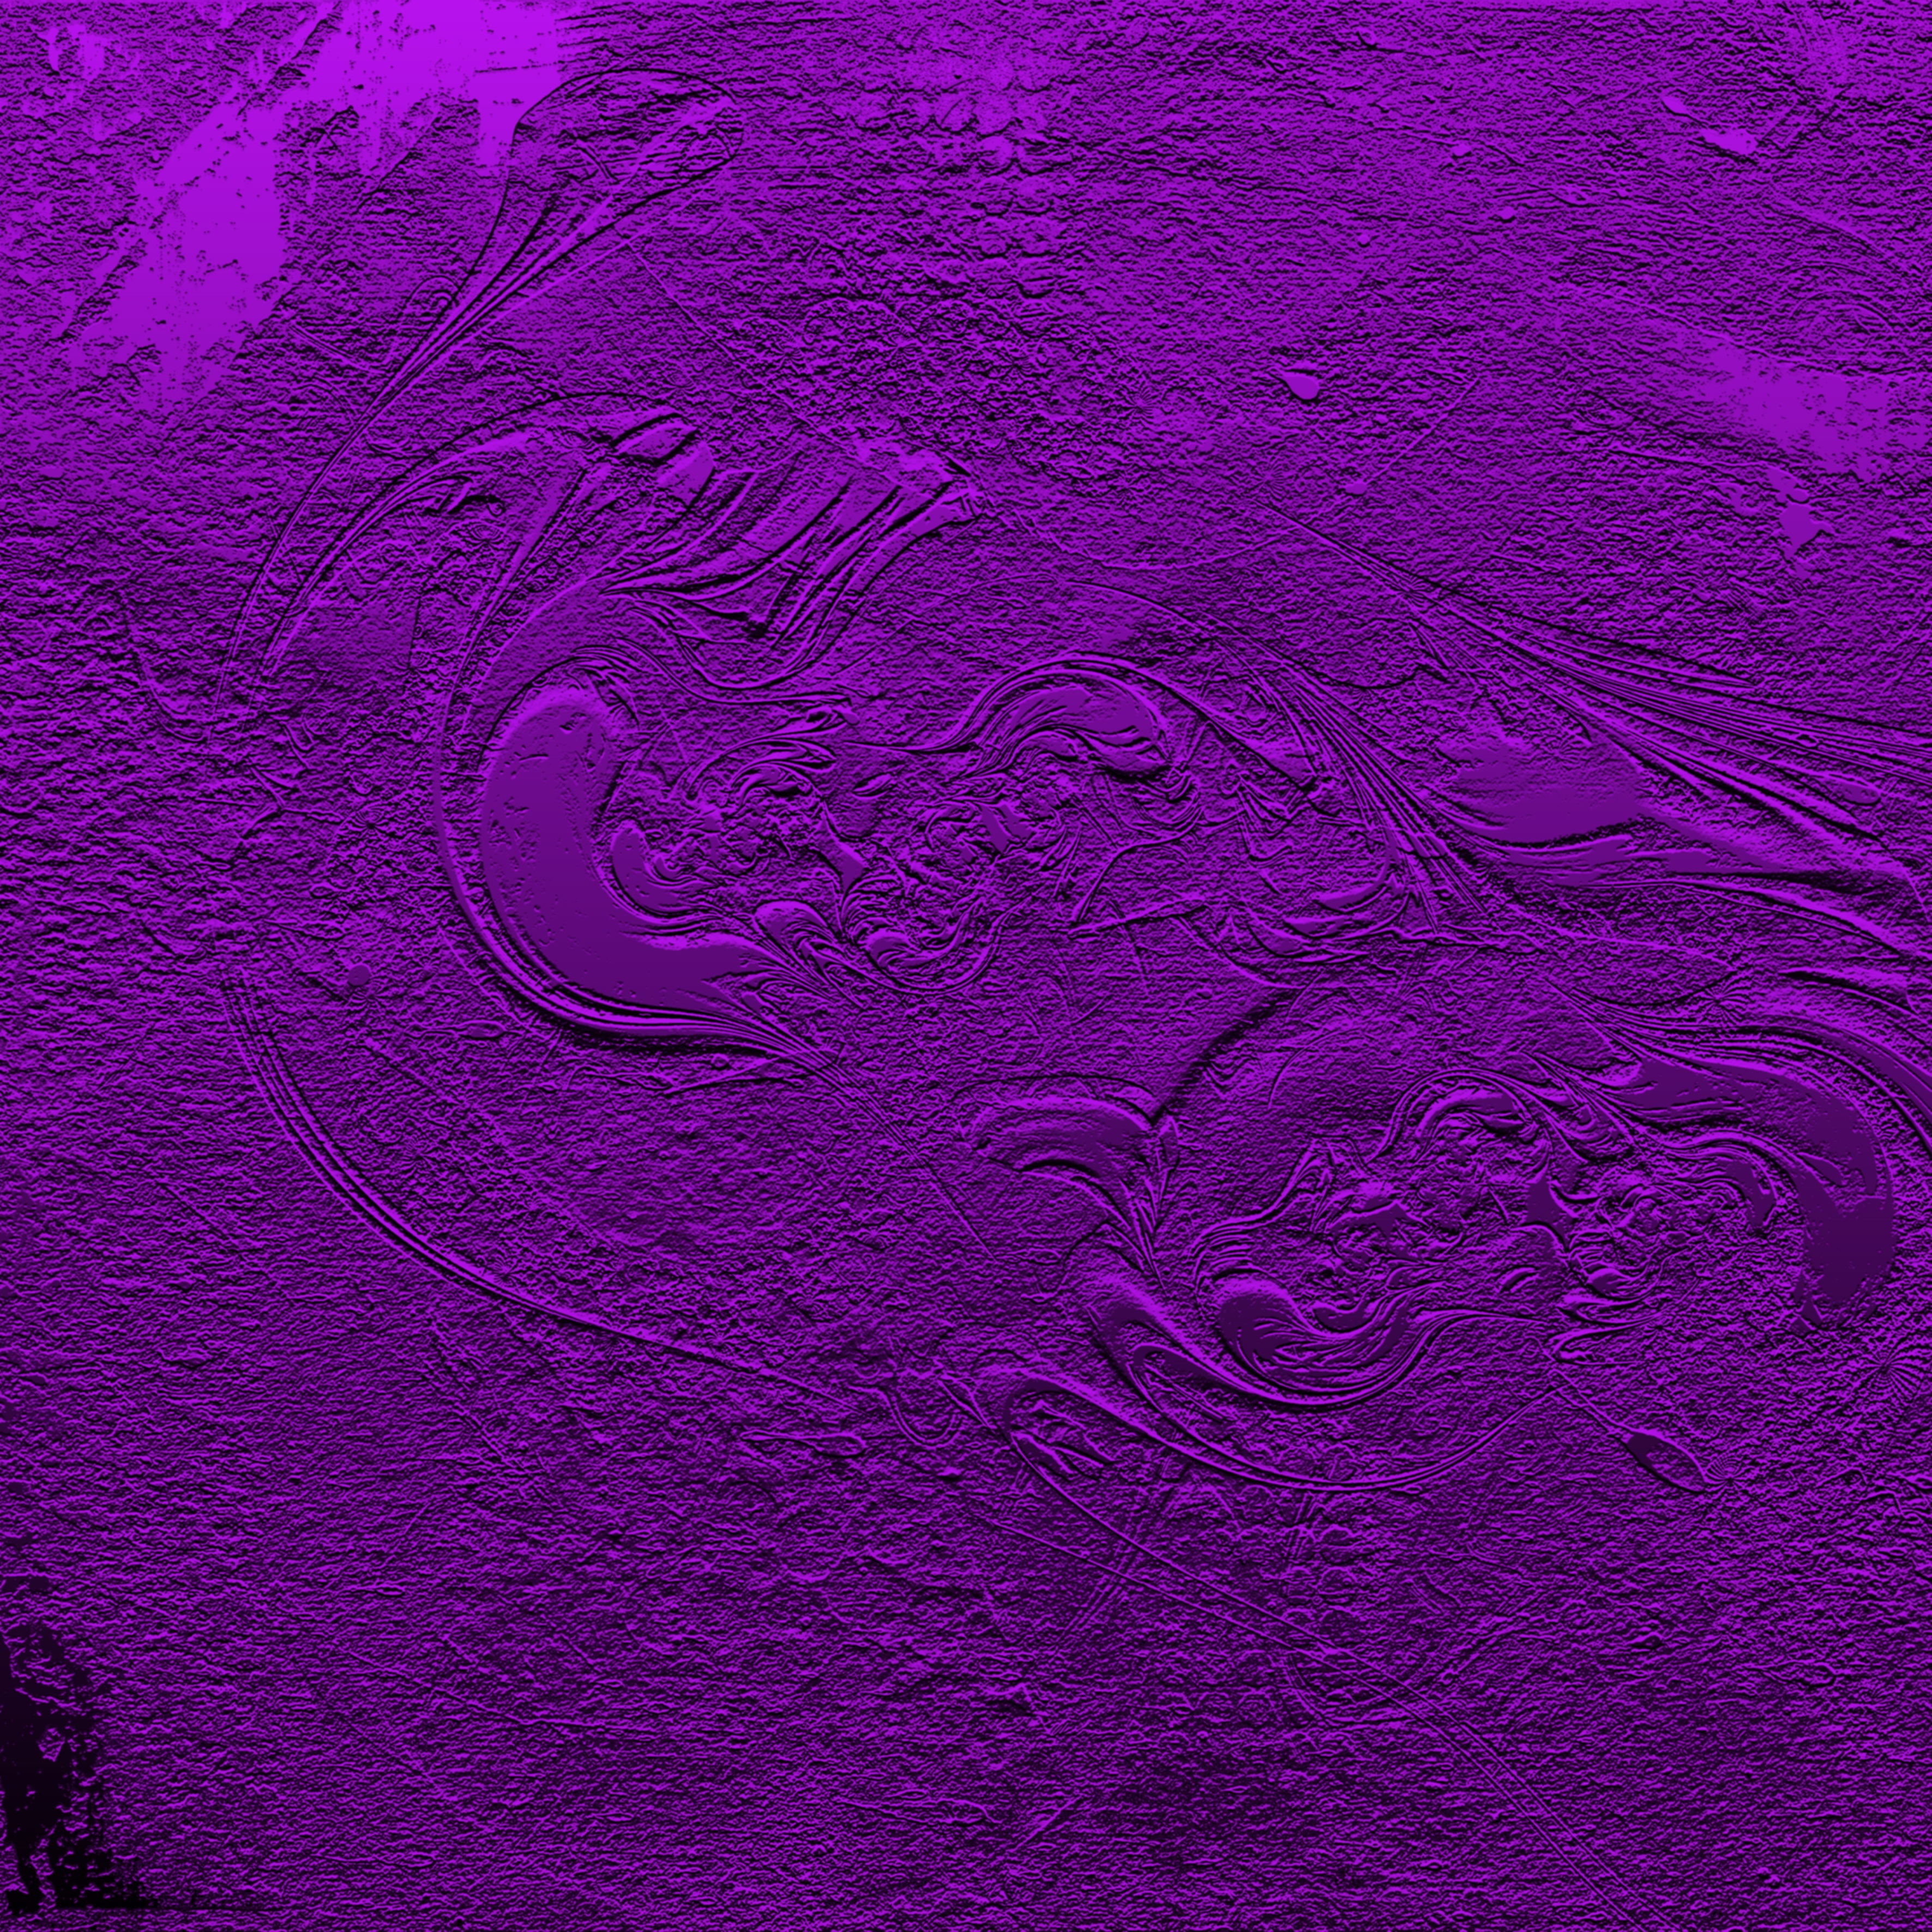 purple, texture, patterns, textures, violet, irregularities